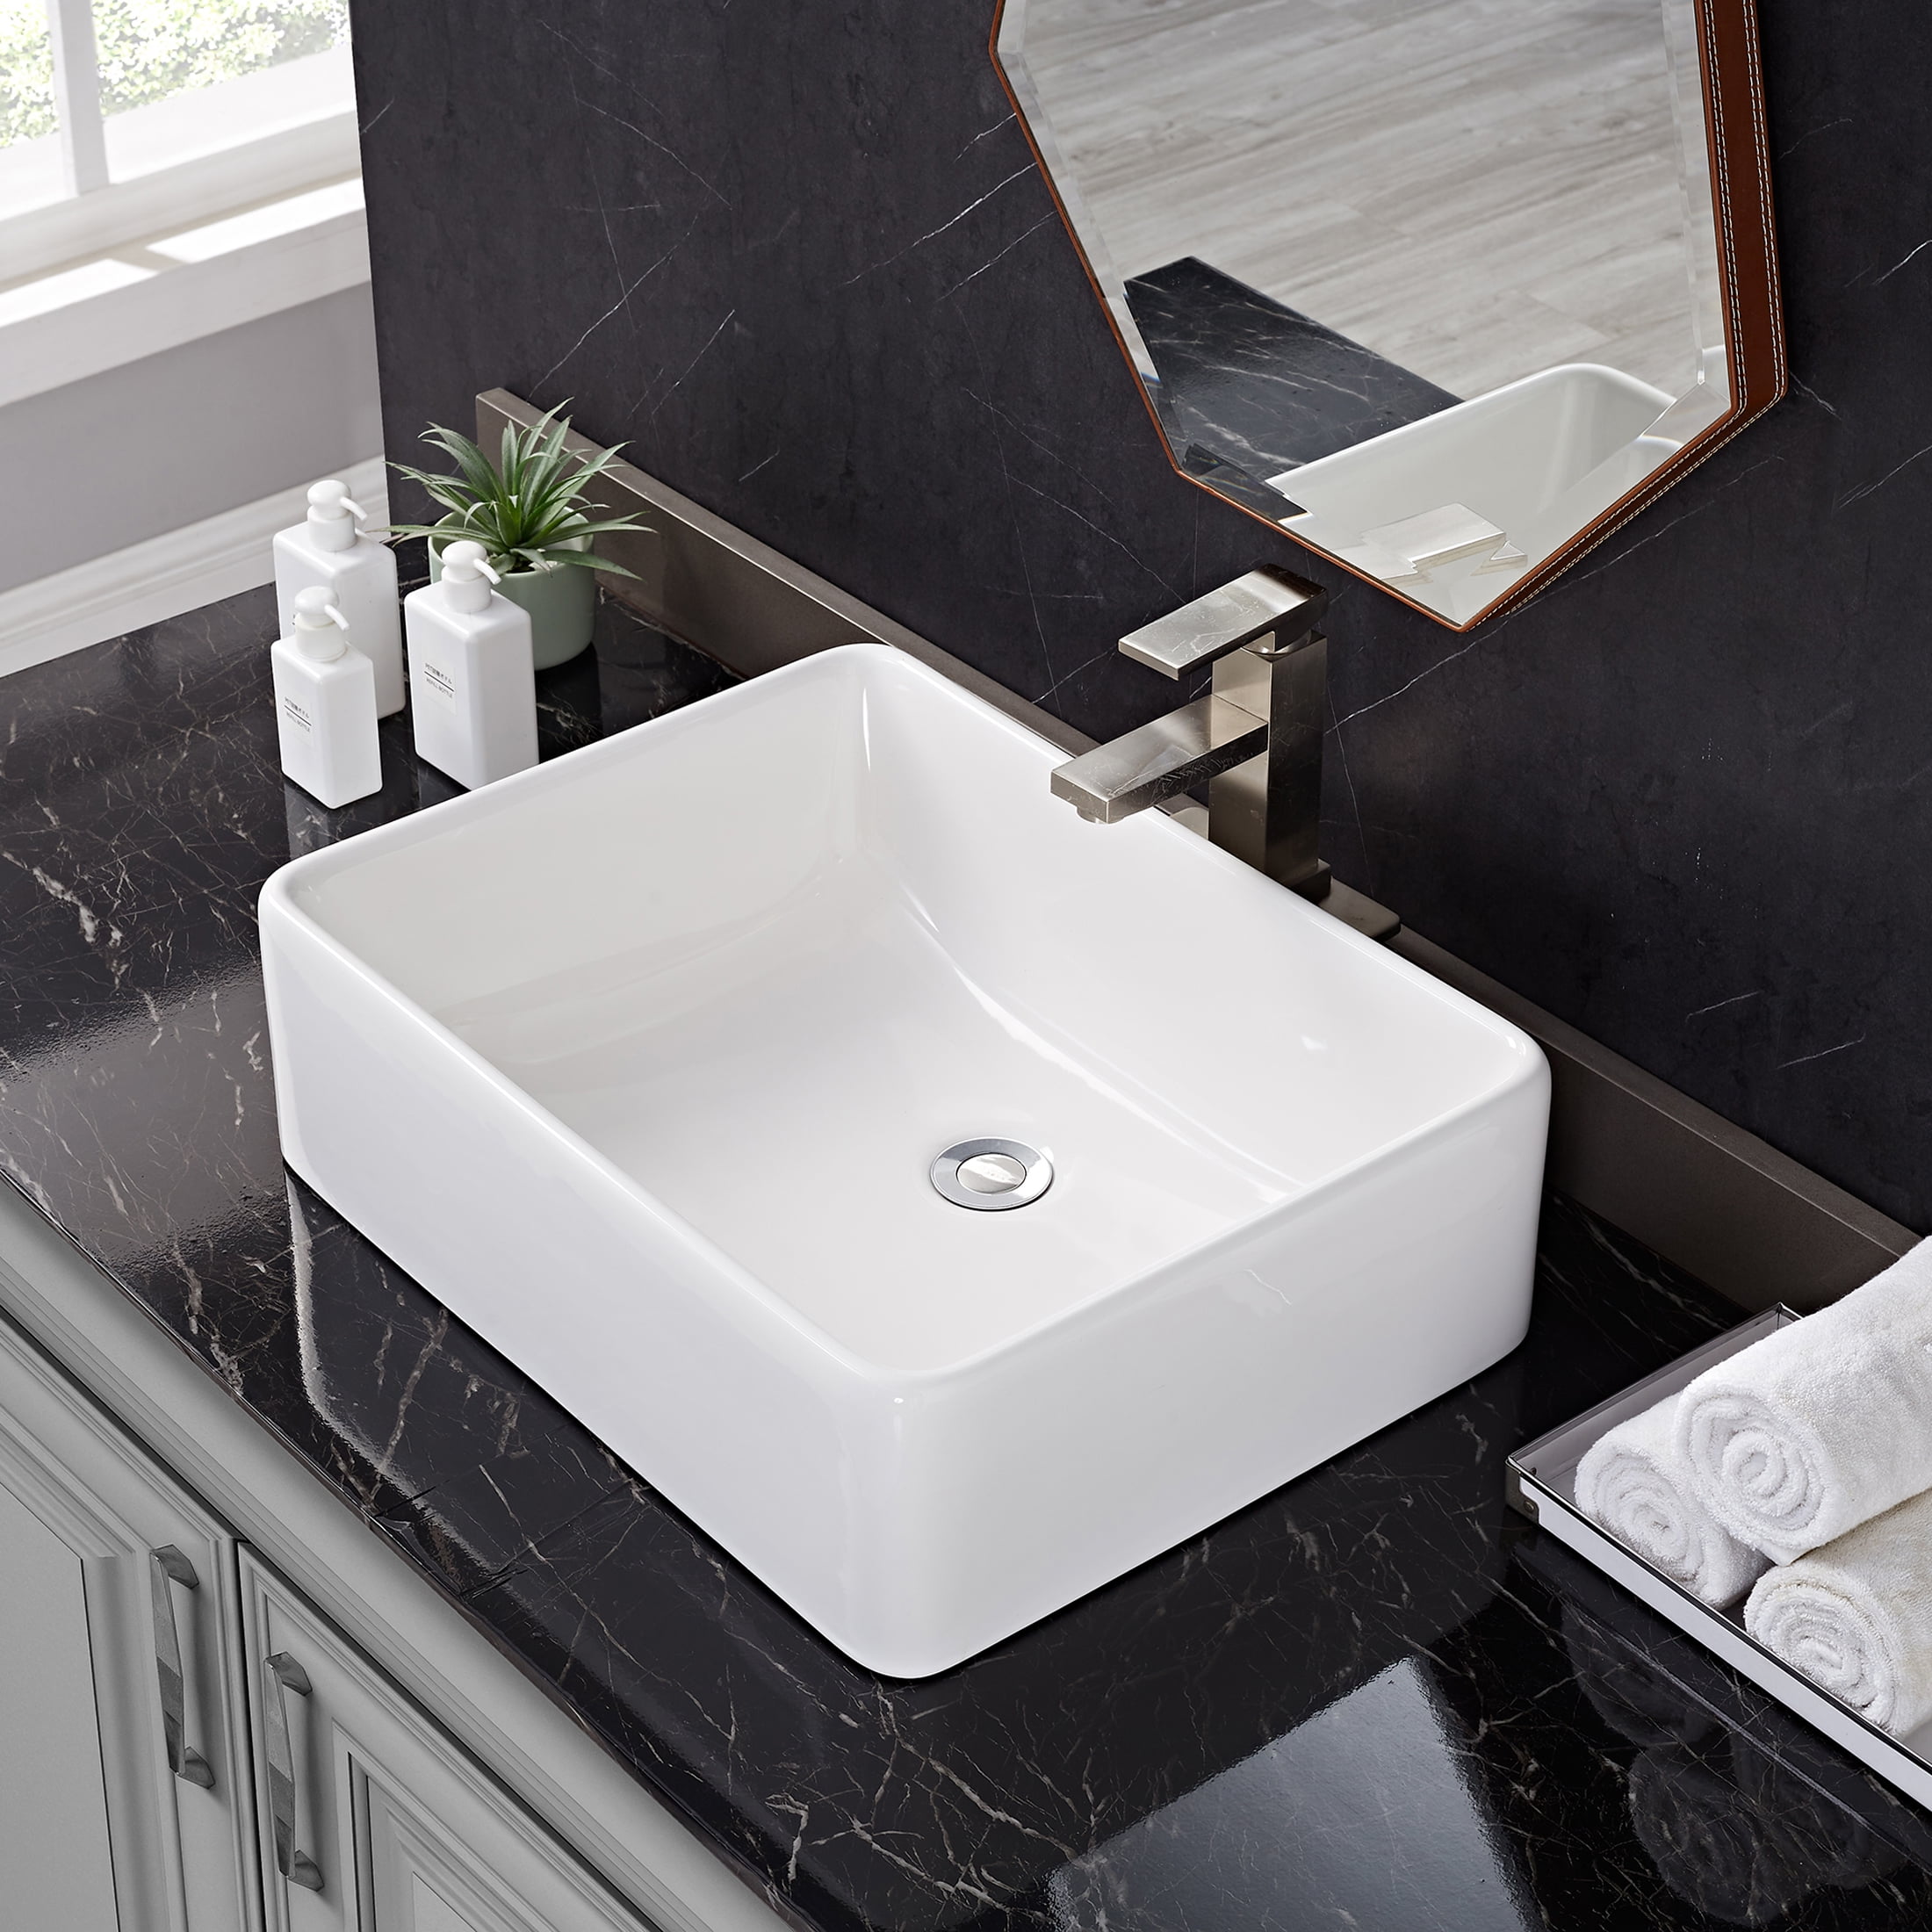 ELLAI Rectangular Countertop Vessel Sink for Bathrooms, Ceramic White ...